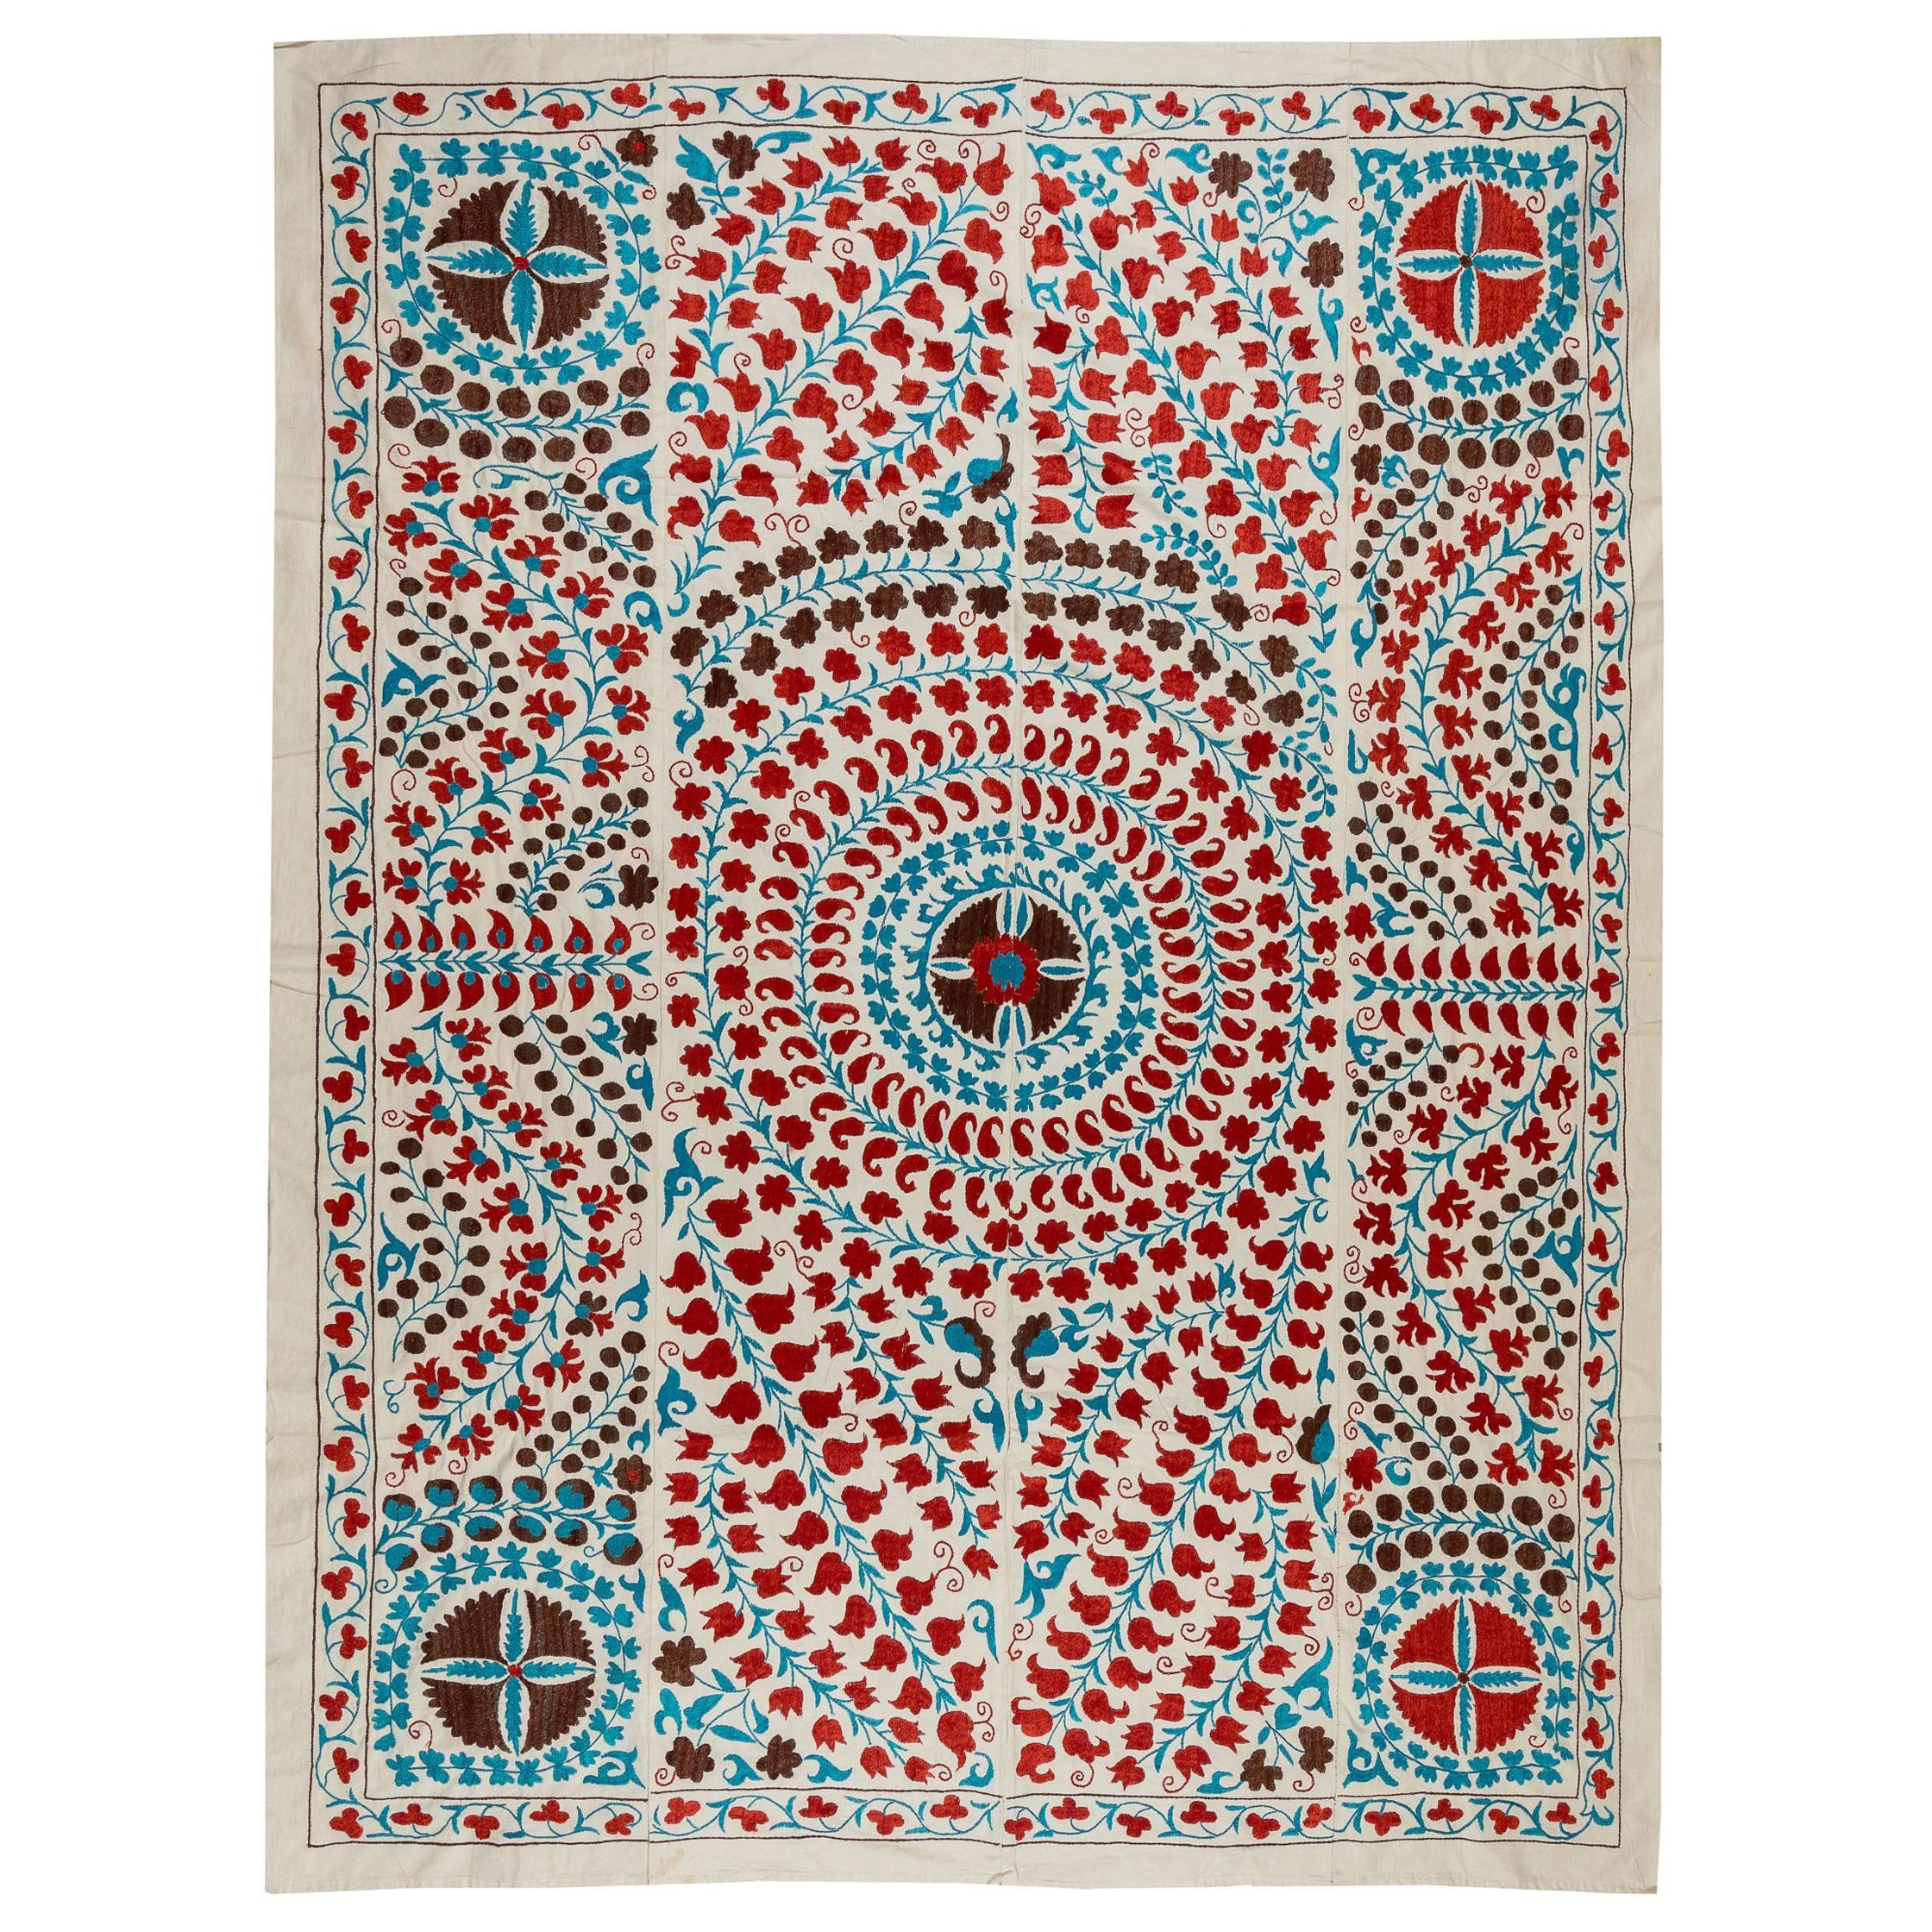 Brand New Uzbek Suzani Textile, Embroidered Cotton, Silk Wall Hanging